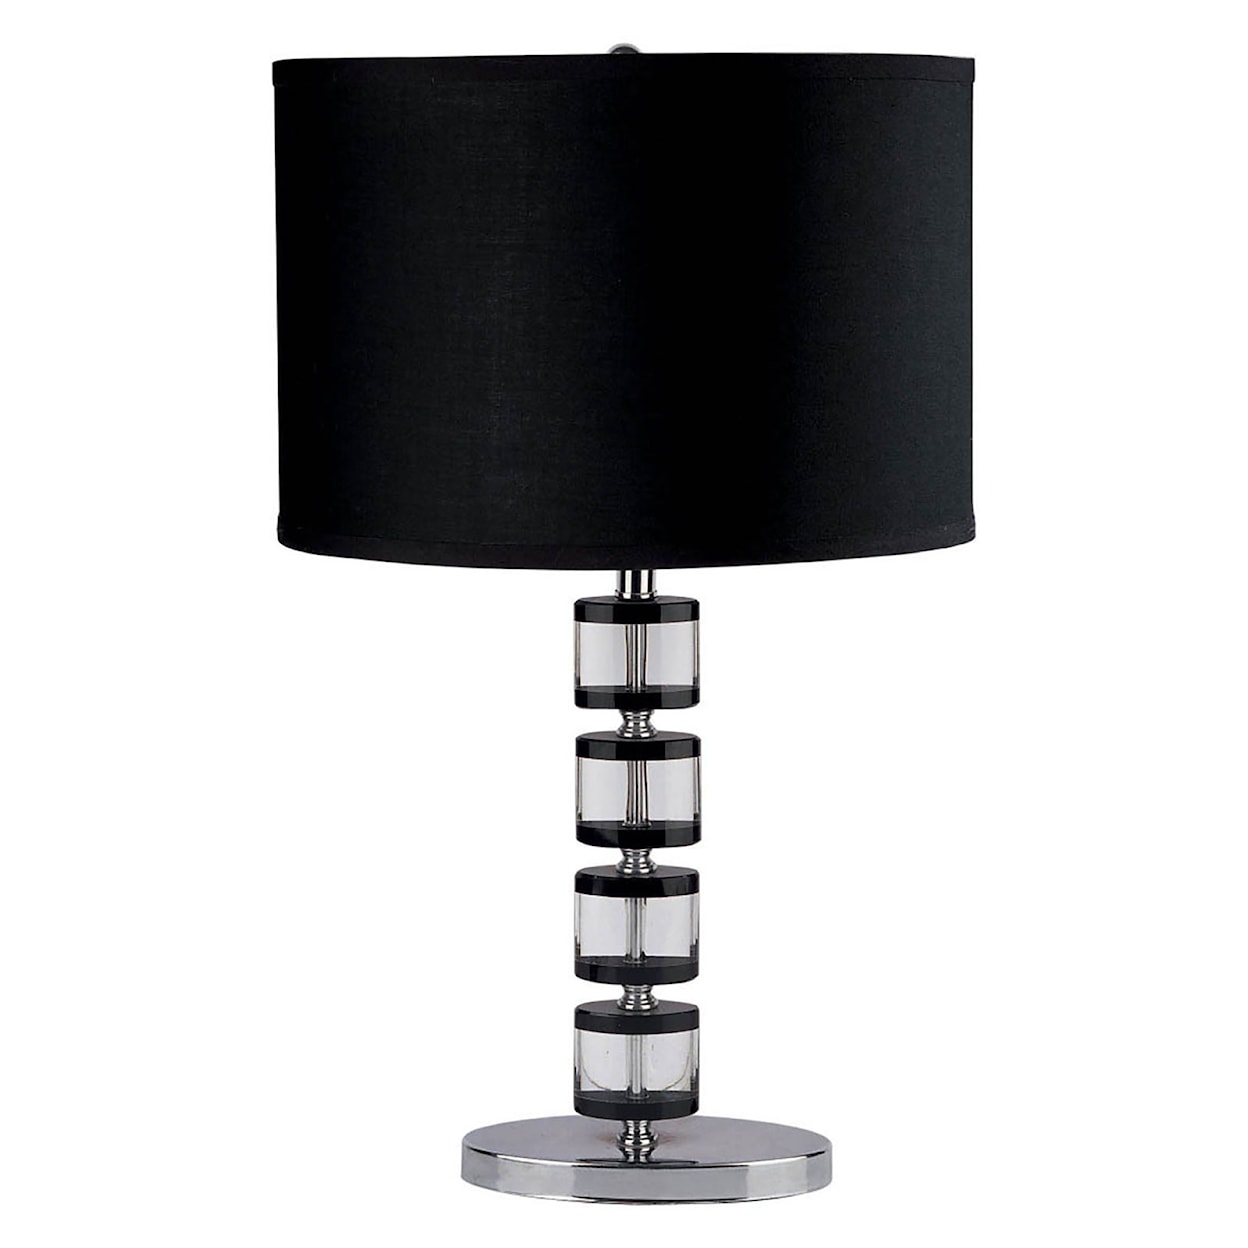 Furniture of America Zoe Table Lamp